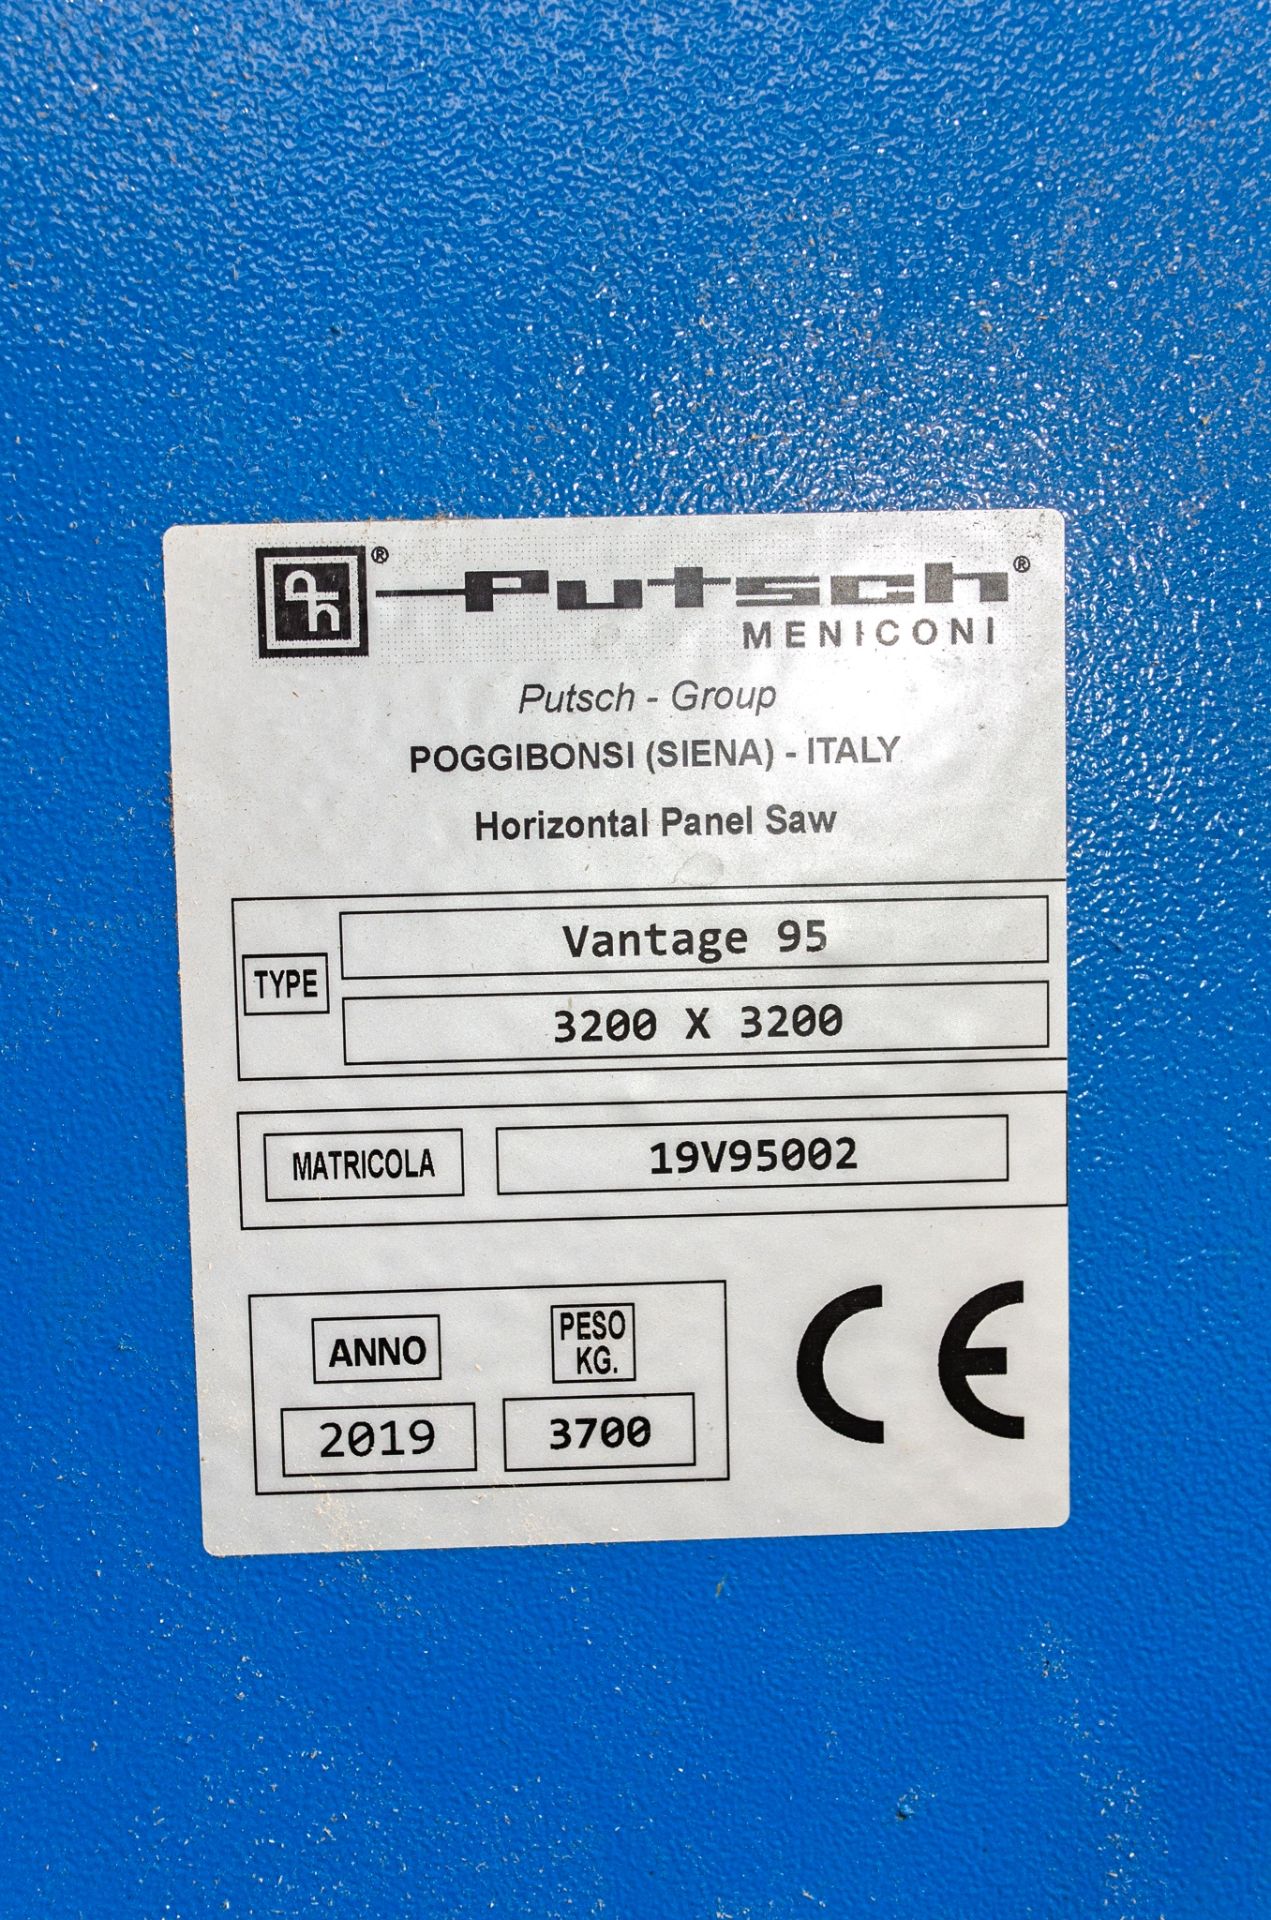 Putsch Meniconi Vantage 95 horizontal panel saw Year: 2019 S/N: 19V95002 c/w conveyor feed system ( - Image 14 of 14